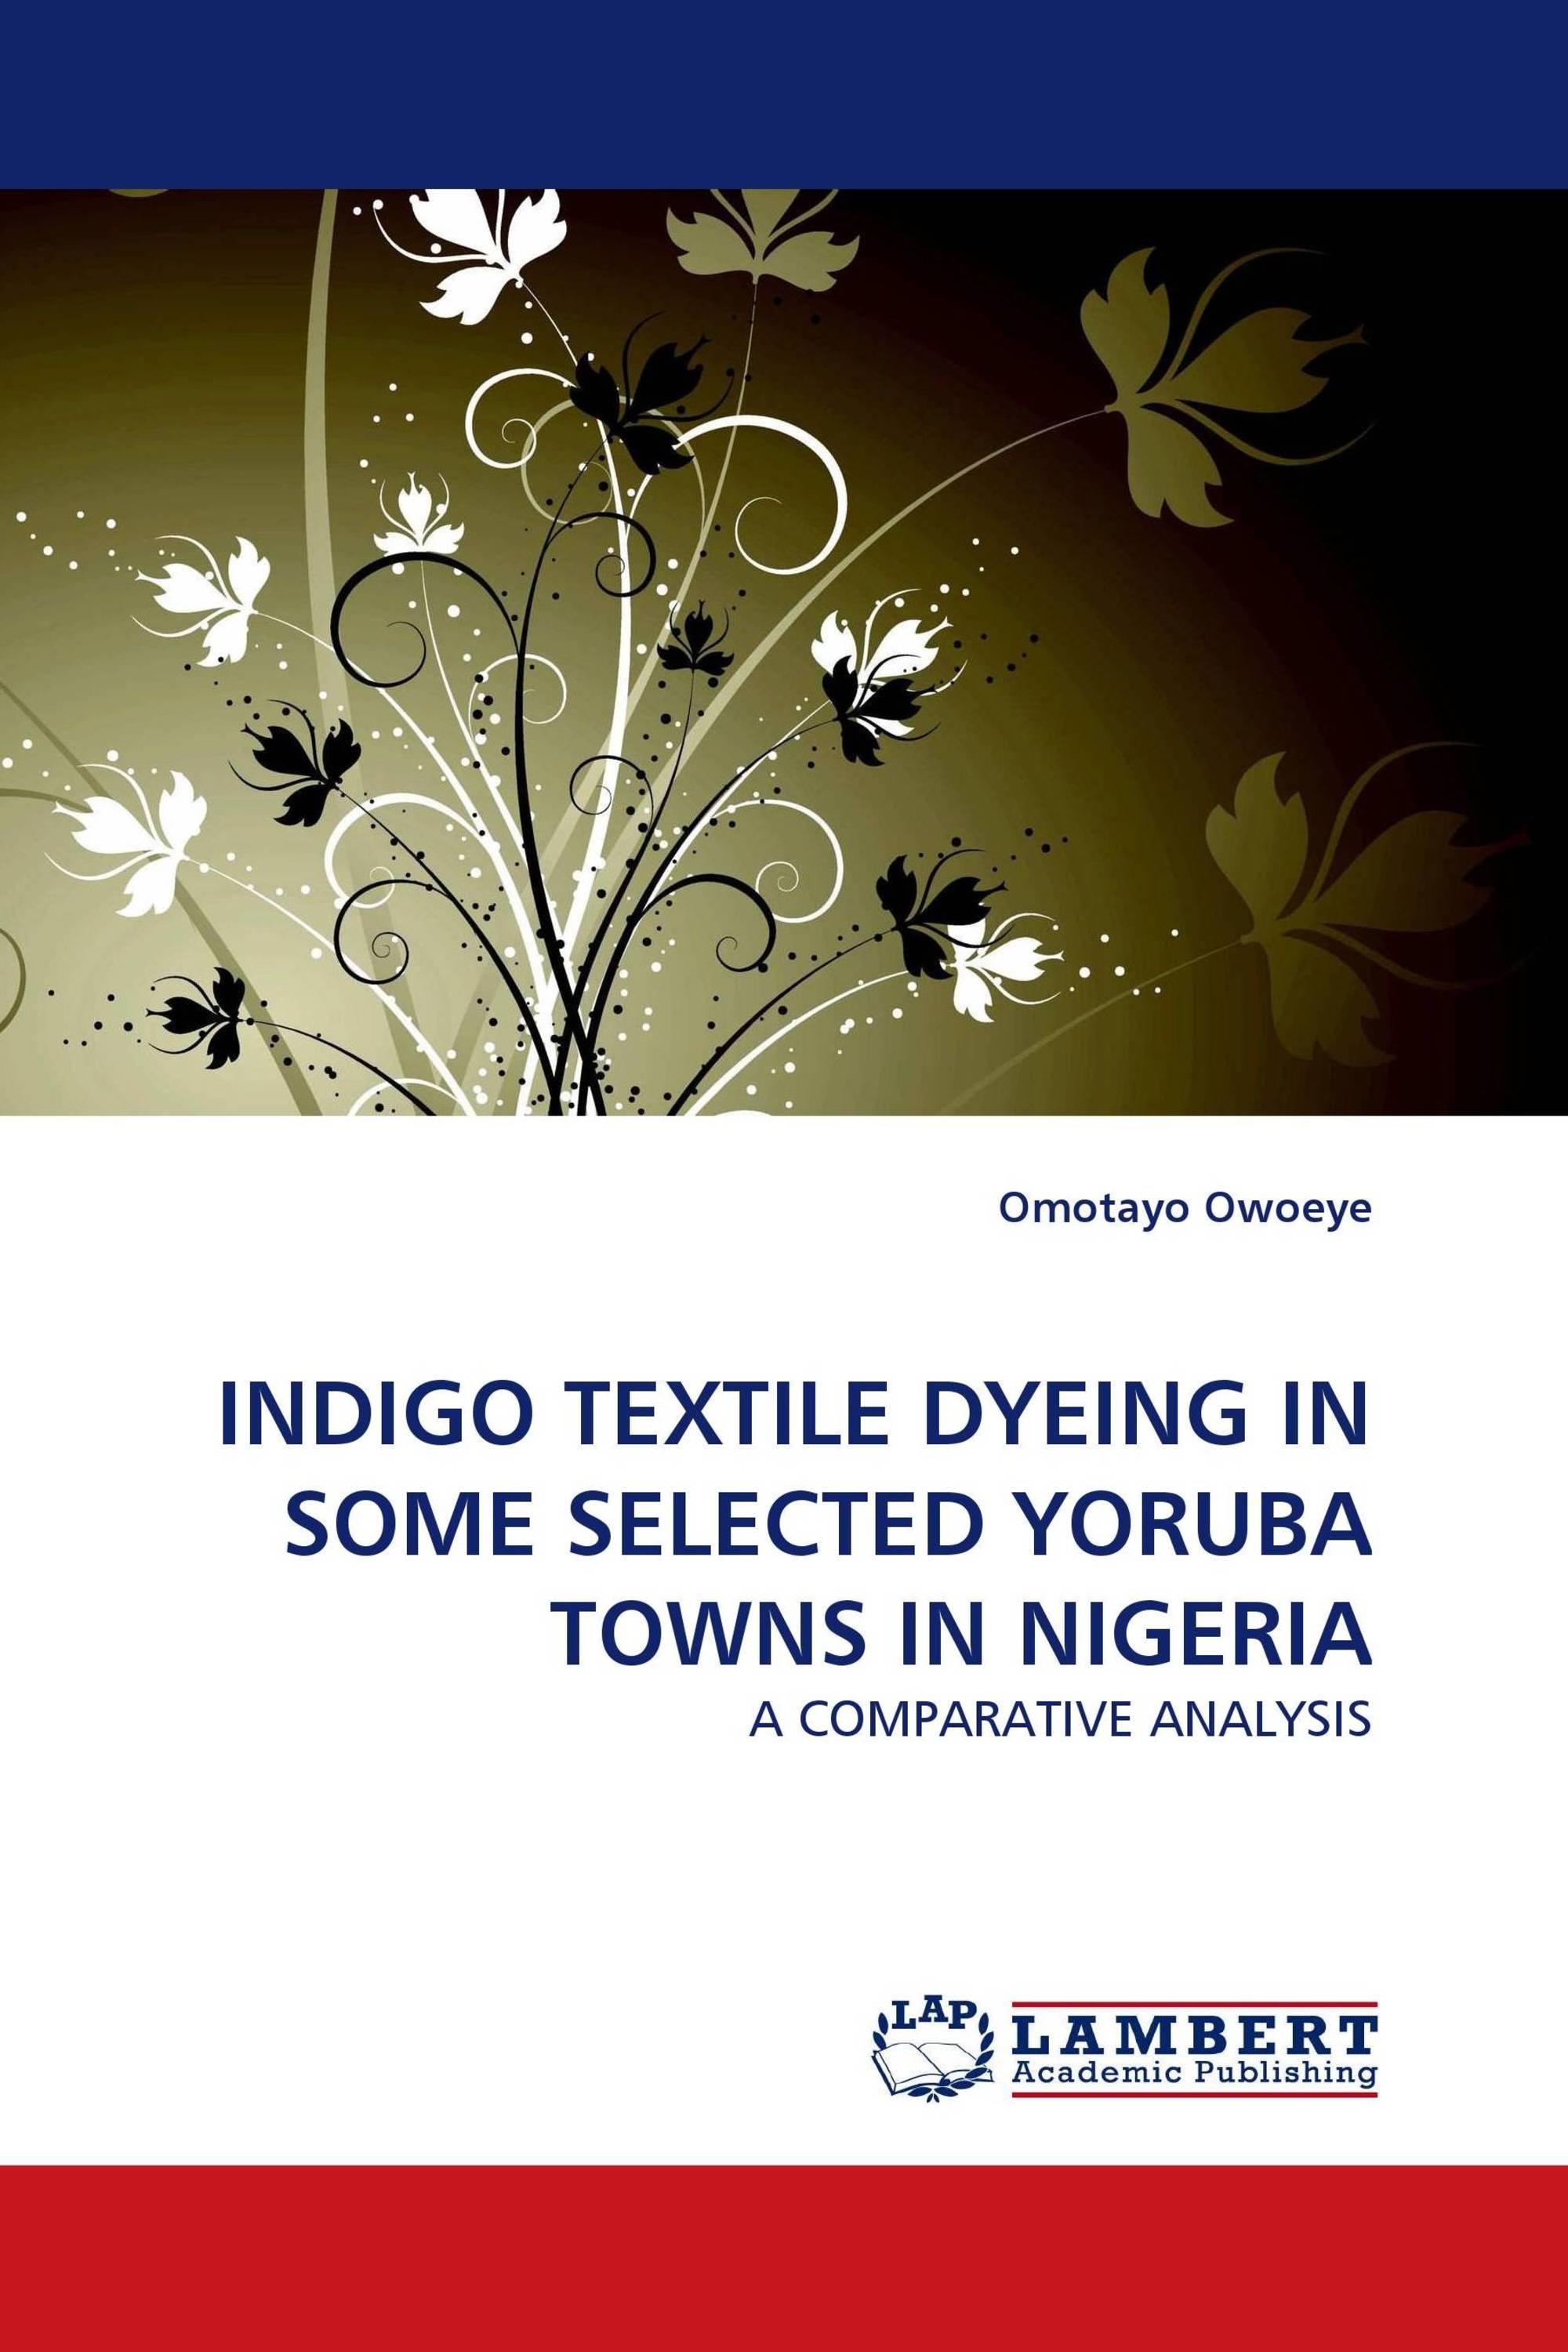 INDIGO TEXTILE DYEING IN SOME SELECTED YORUBA TOWNS IN NIGERIA